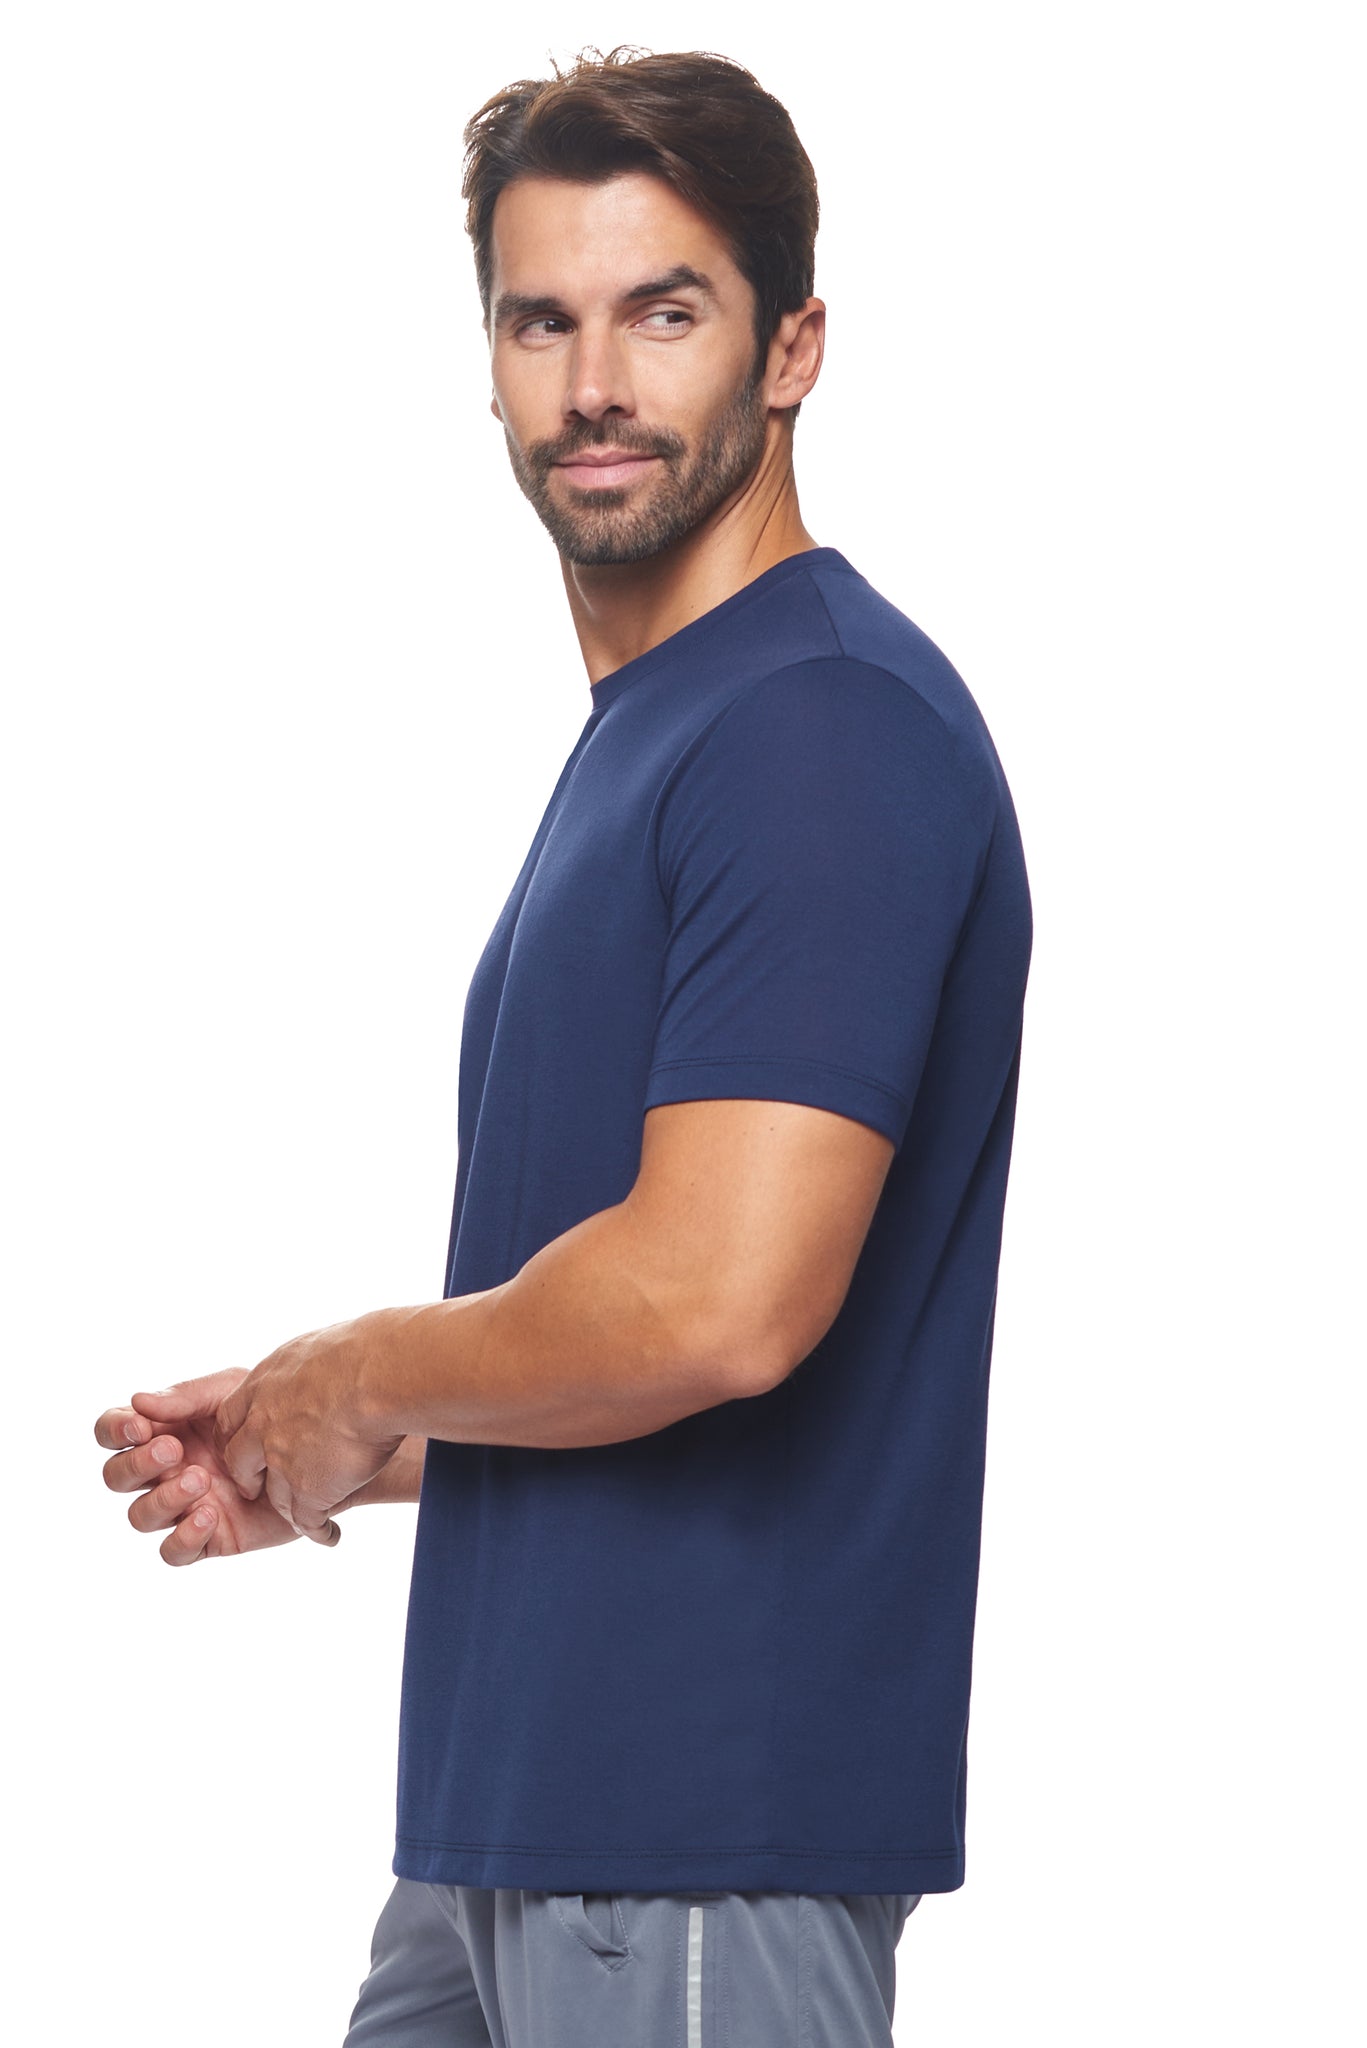 Expert Brand Wholesale Super Soft Eco-Friendly Performance Apparel Fashion Sportswear Men's Crewneck T-Shirt Made in USA Navy blue 2#navy